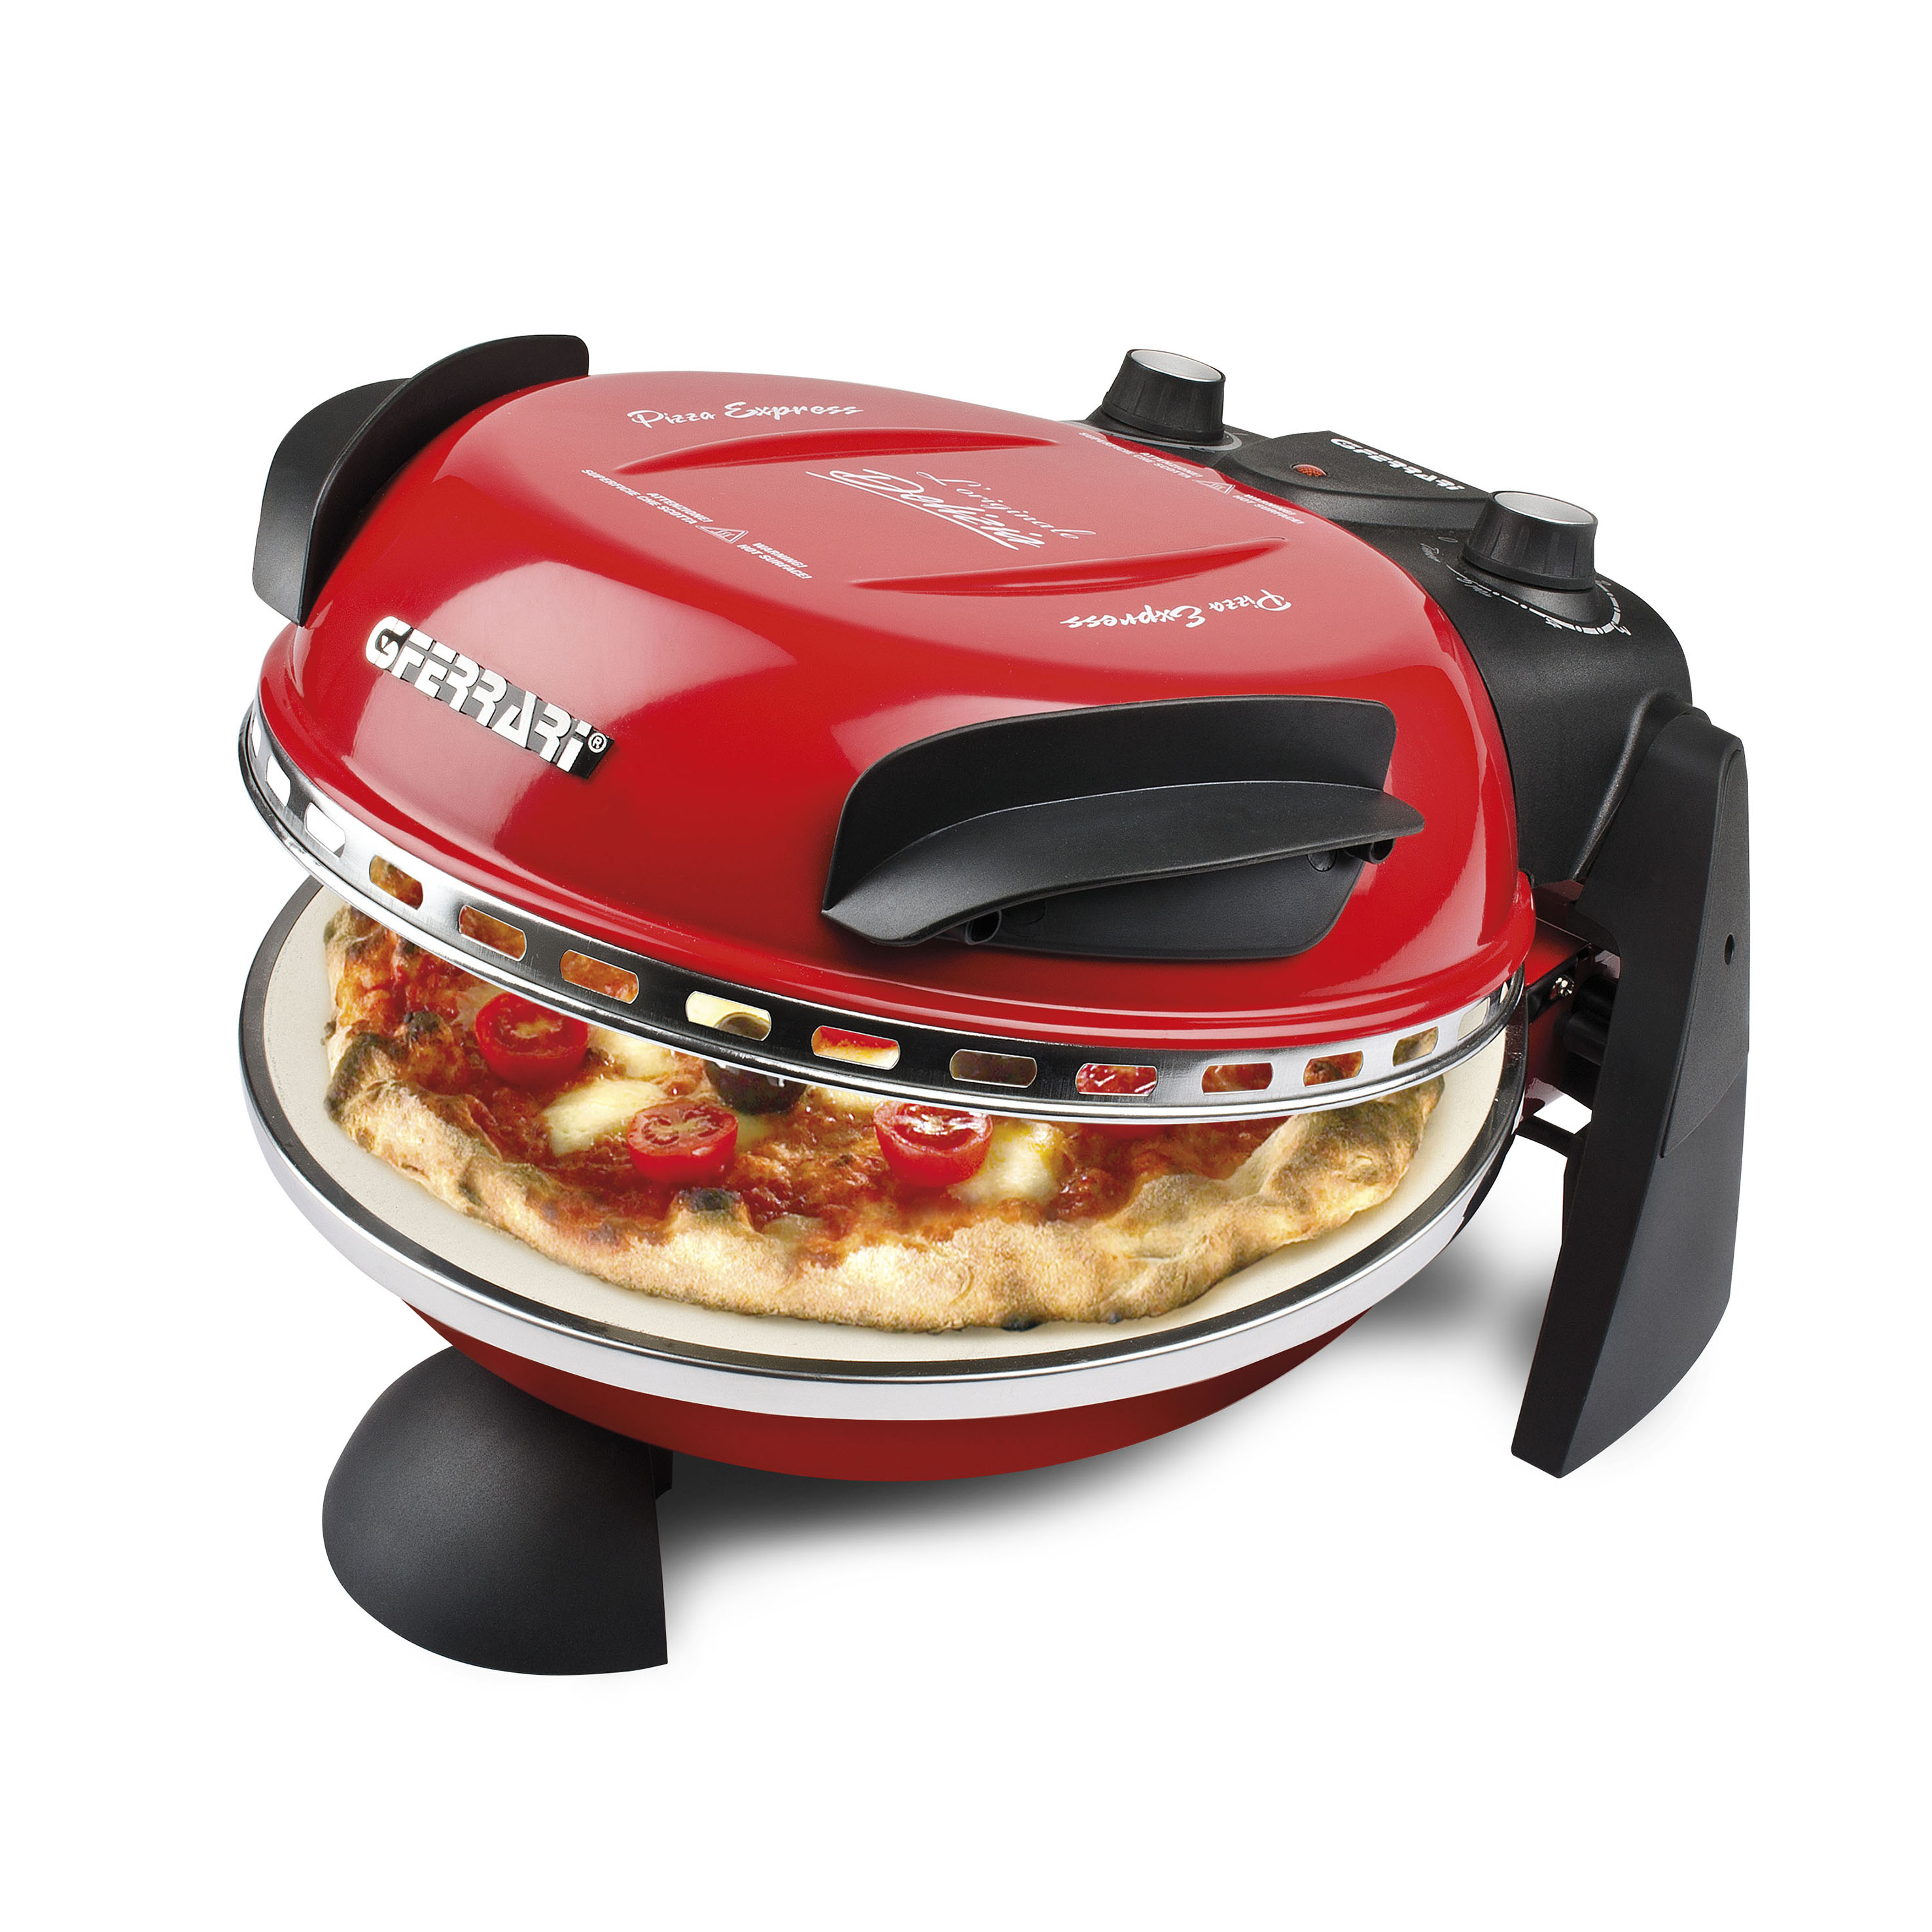 G1000602, Delizia, pizza oven, 1200W, tot 400C, rood